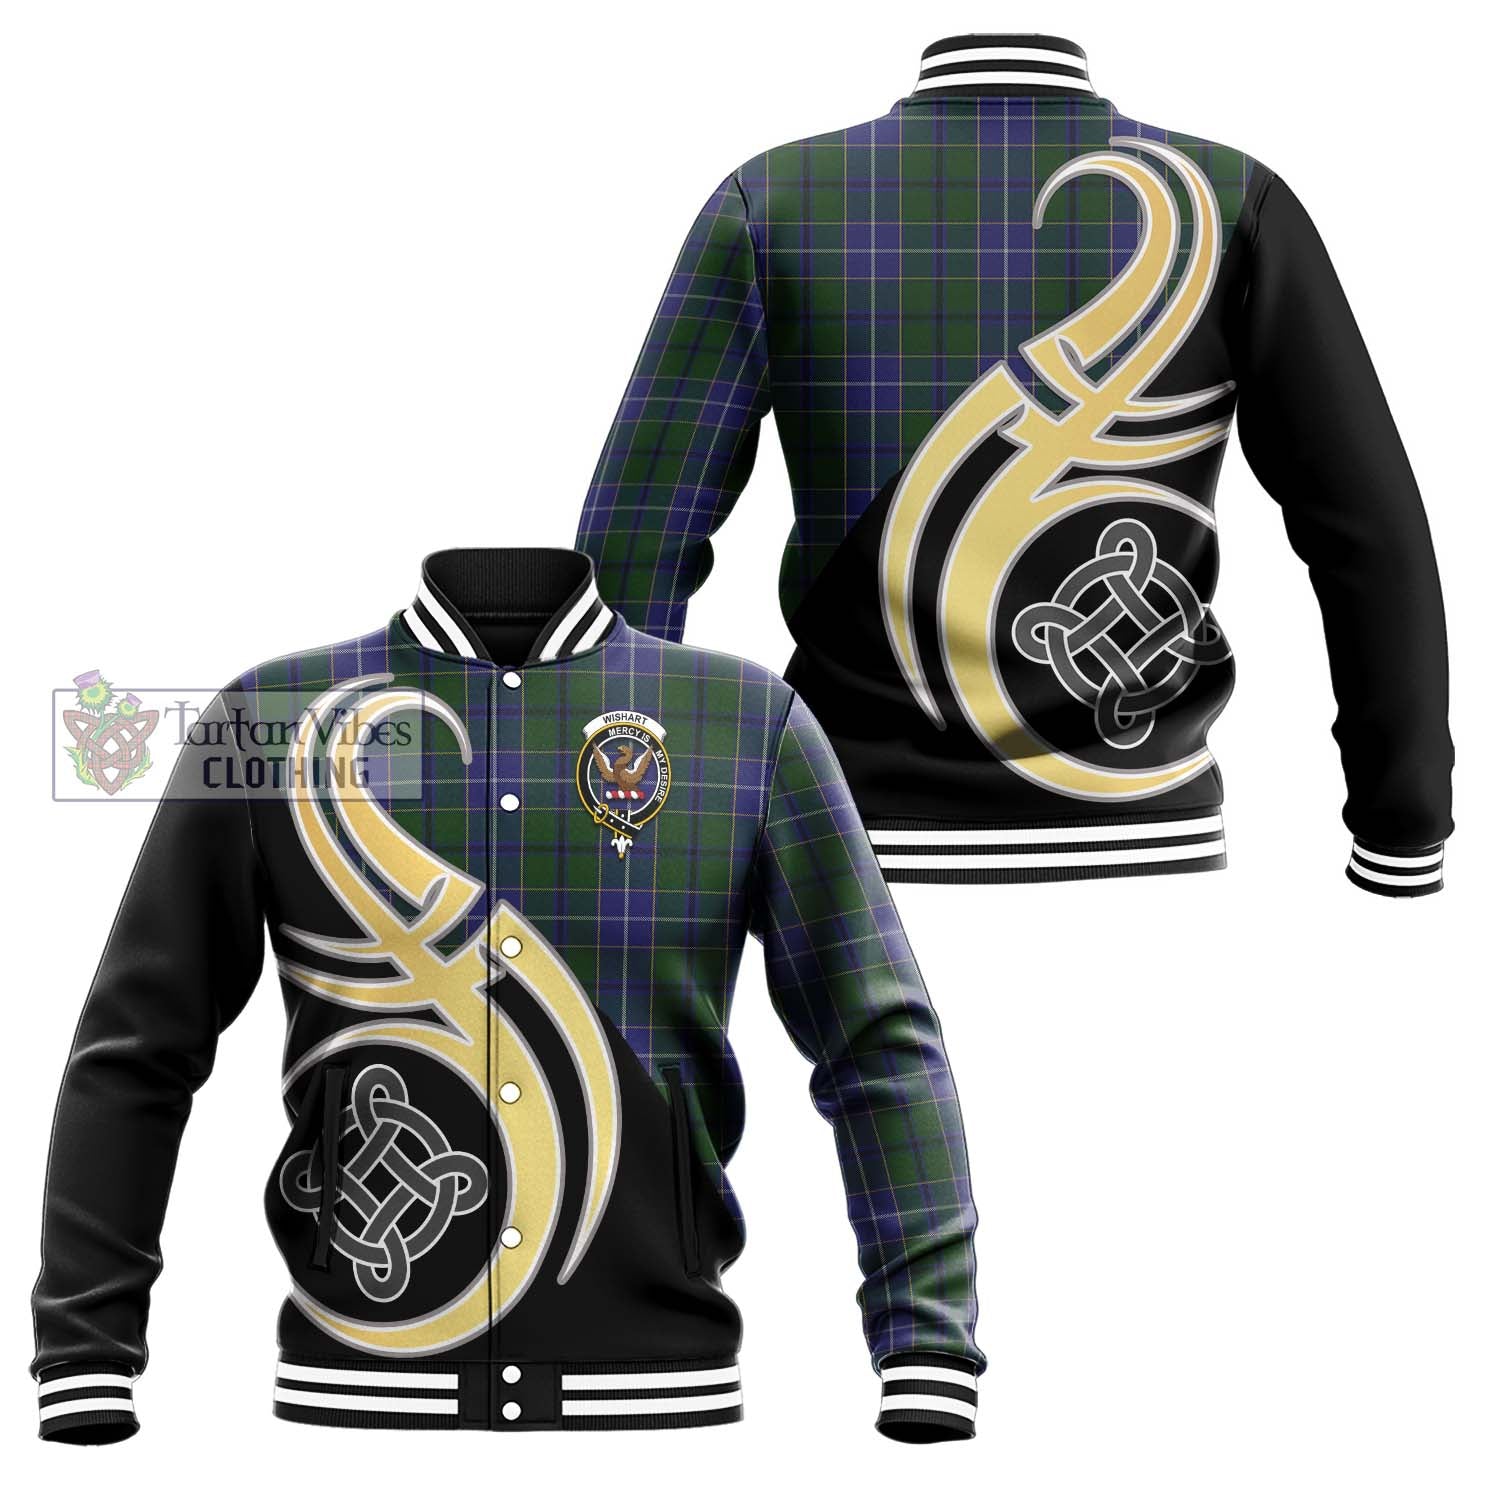 Tartan Vibes Clothing Wishart Hunting Tartan Baseball Jacket with Family Crest and Celtic Symbol Style